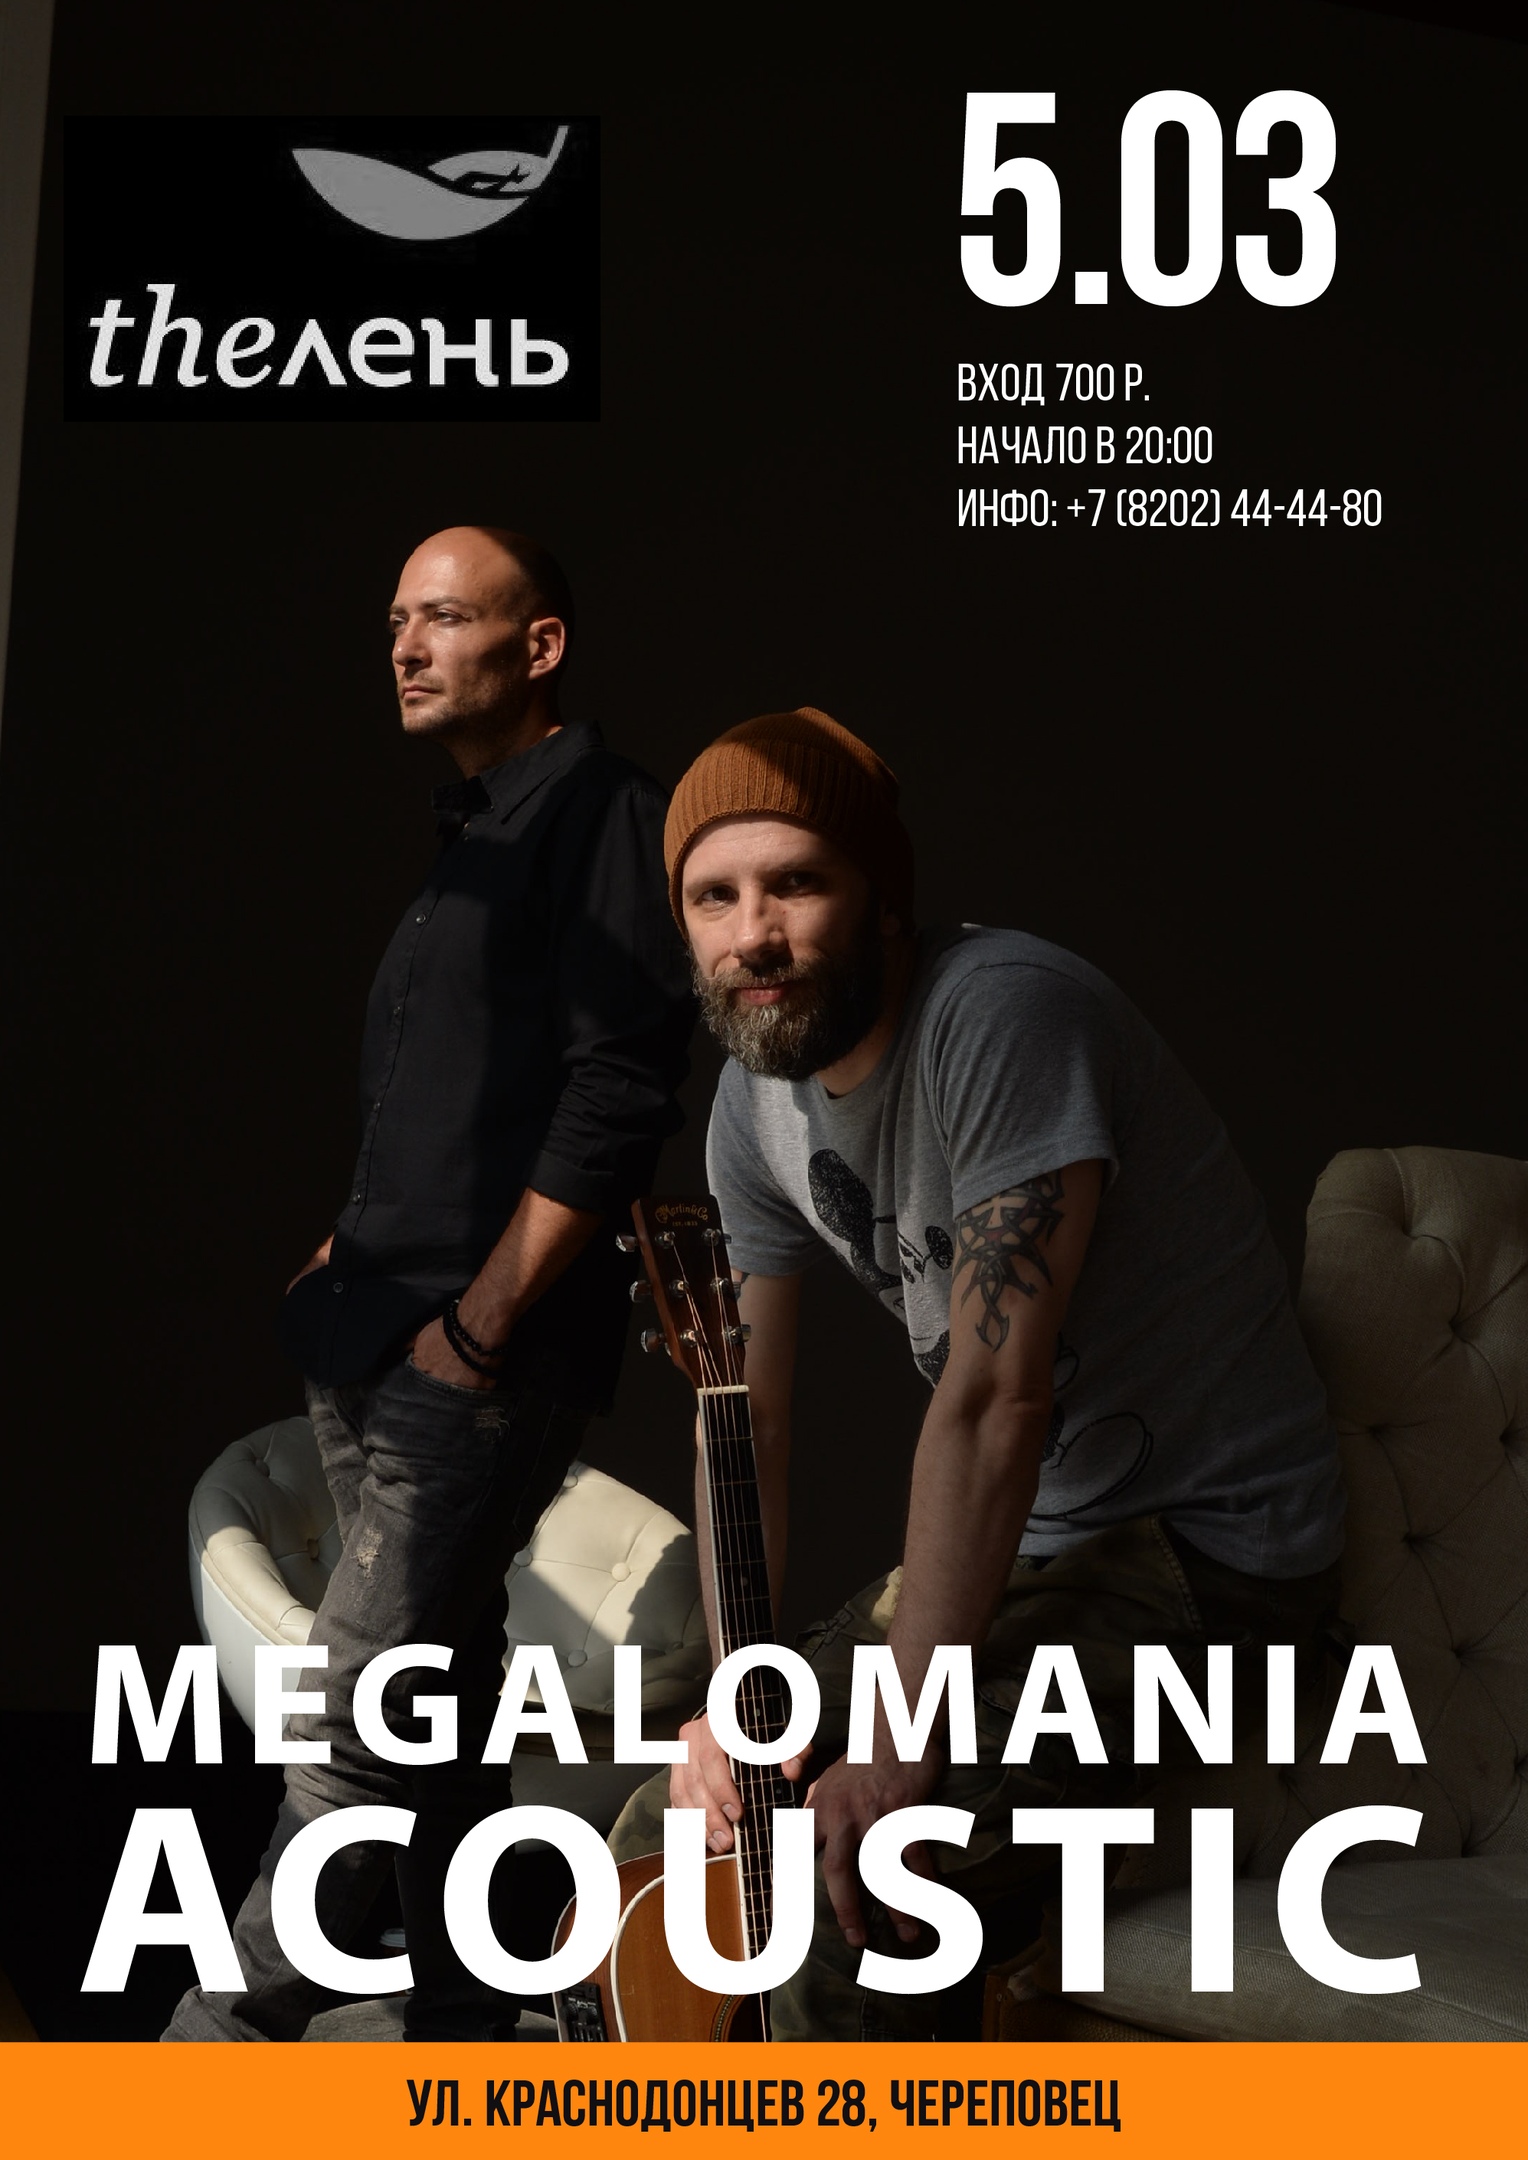 Megalomania Acoustic в Череповце | 05.03.2021 